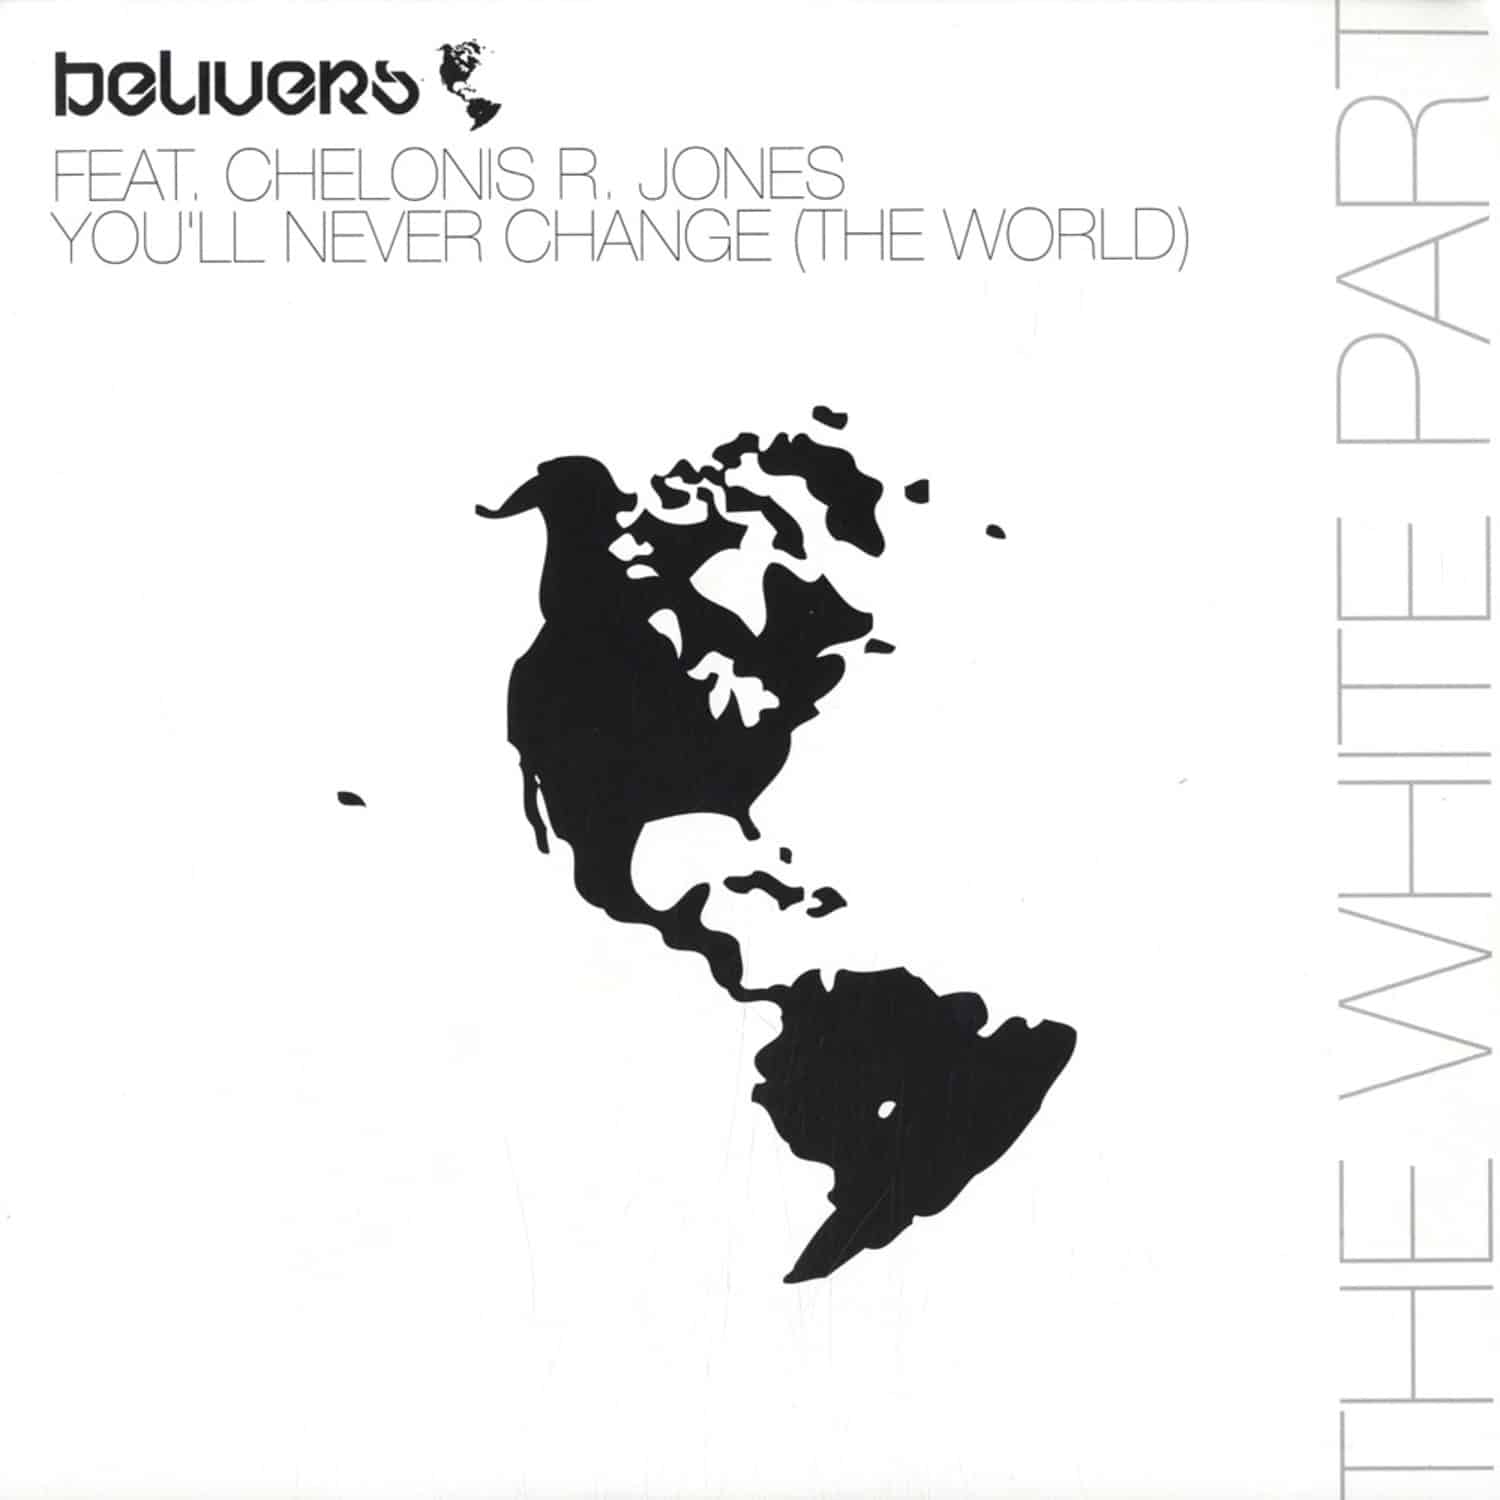 Believers feat. Chelonis R. Jones - YOU LL NEVER CHANGE 